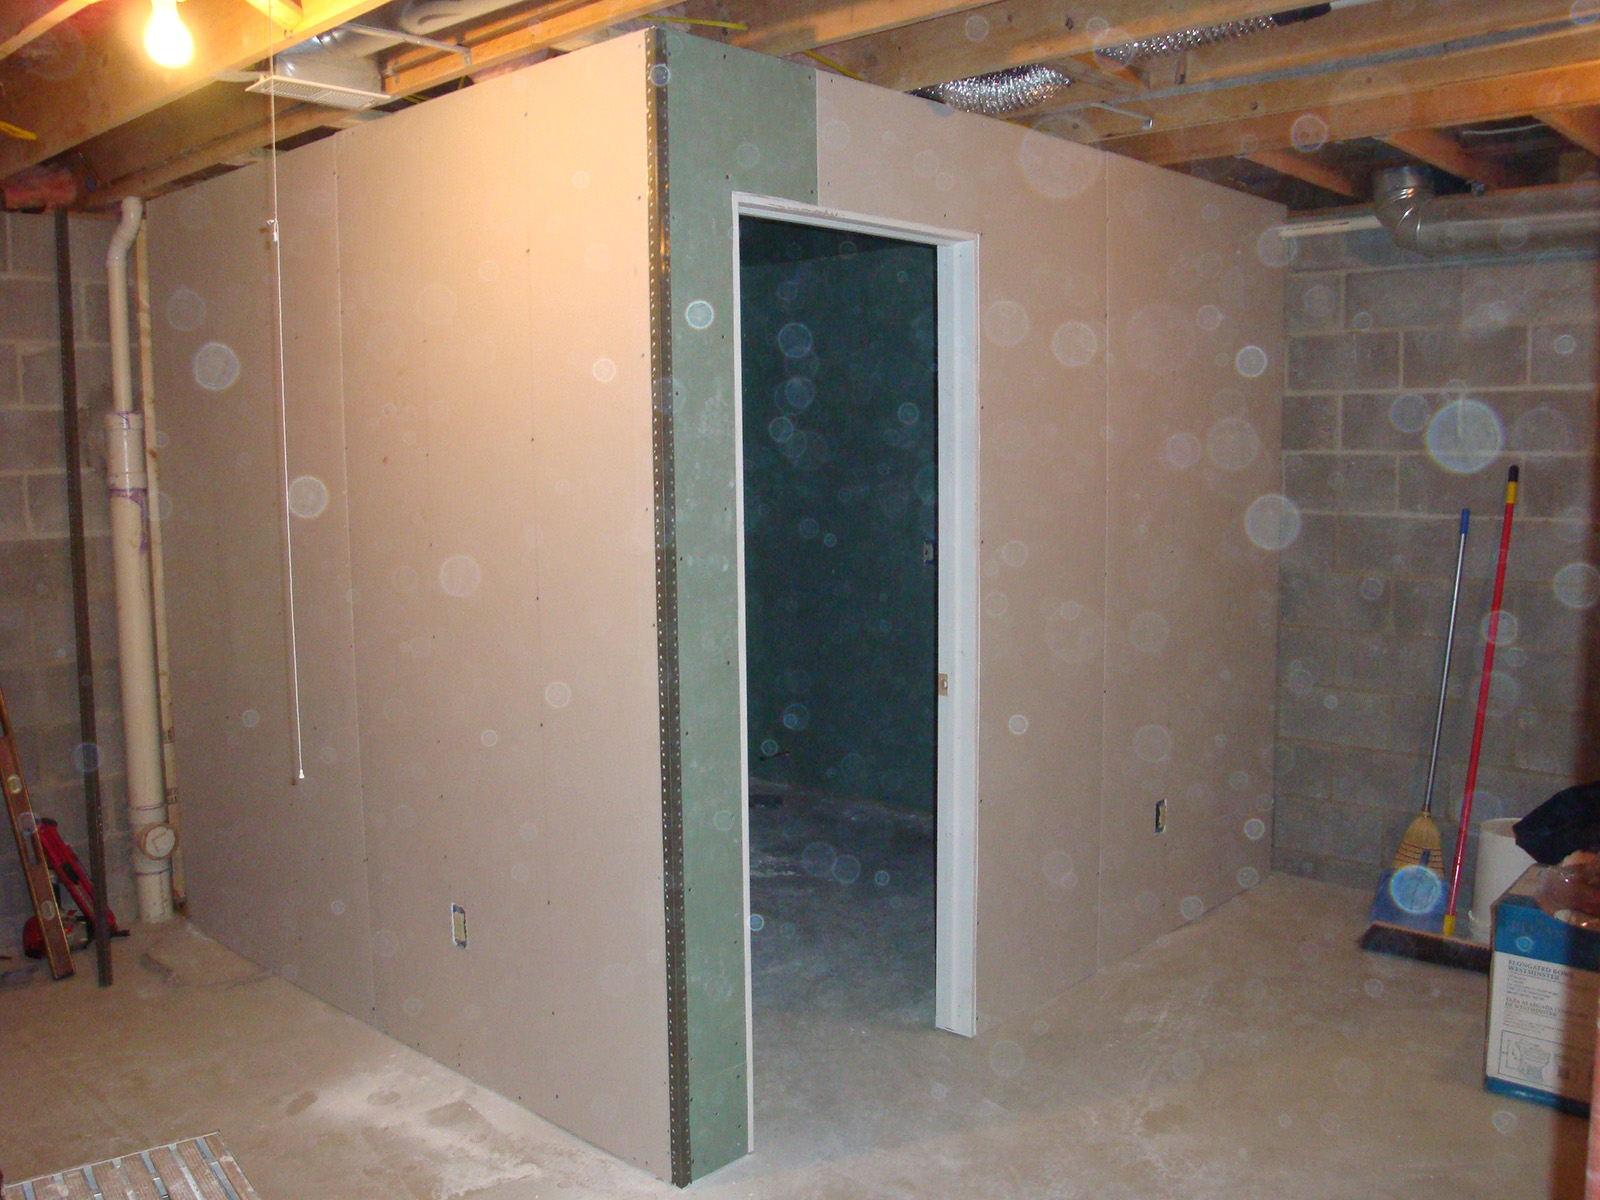 bathroom under construction